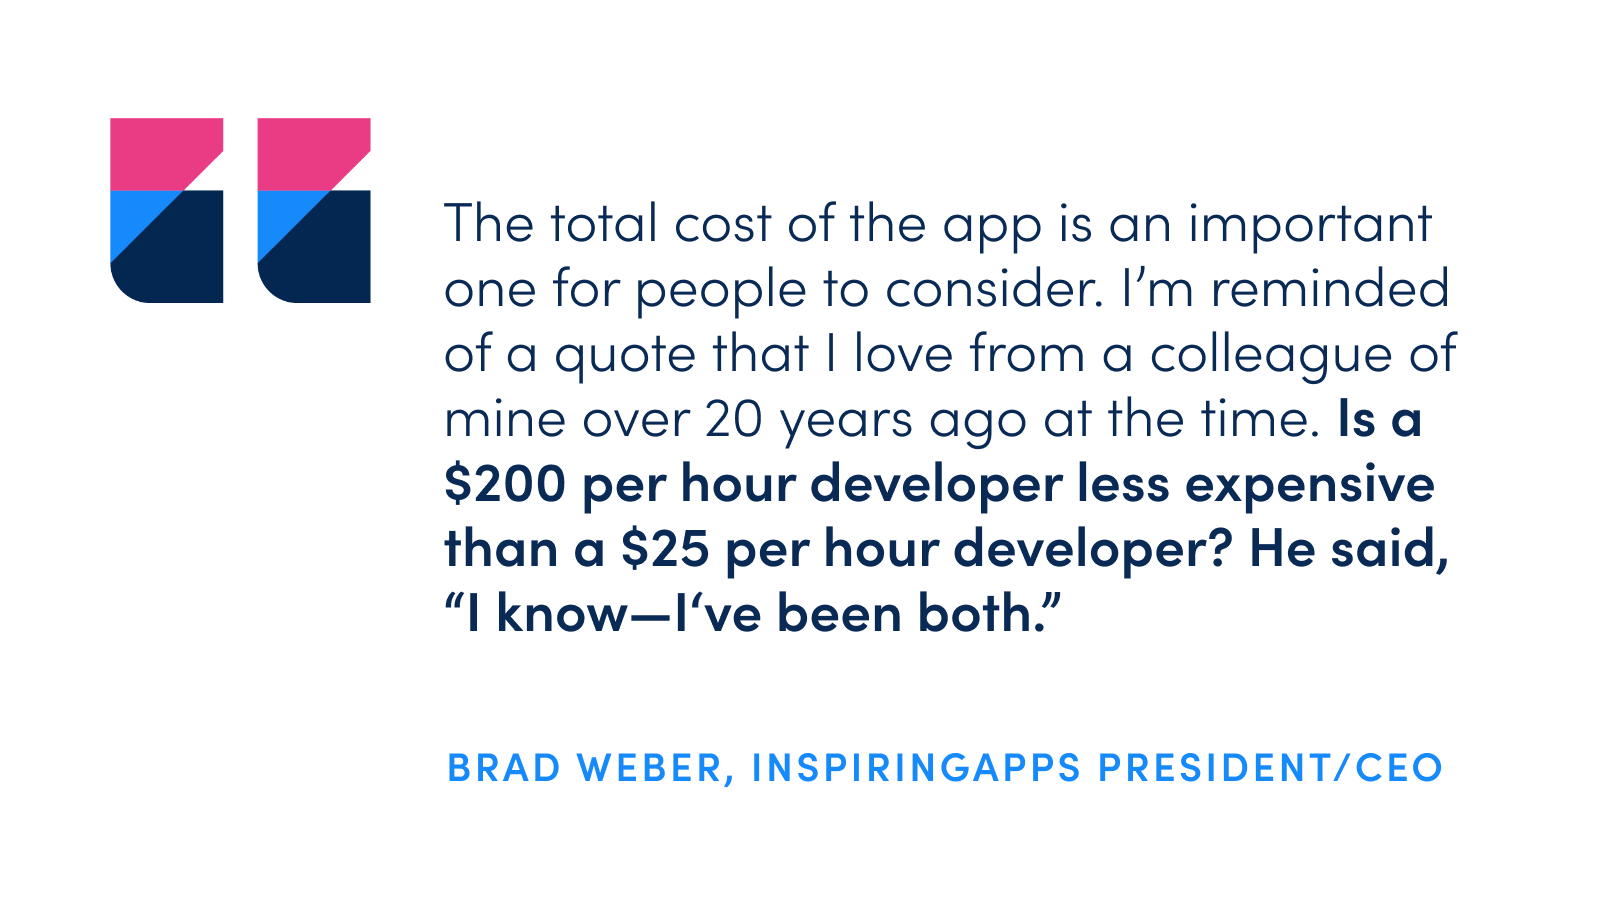 App Development Cost